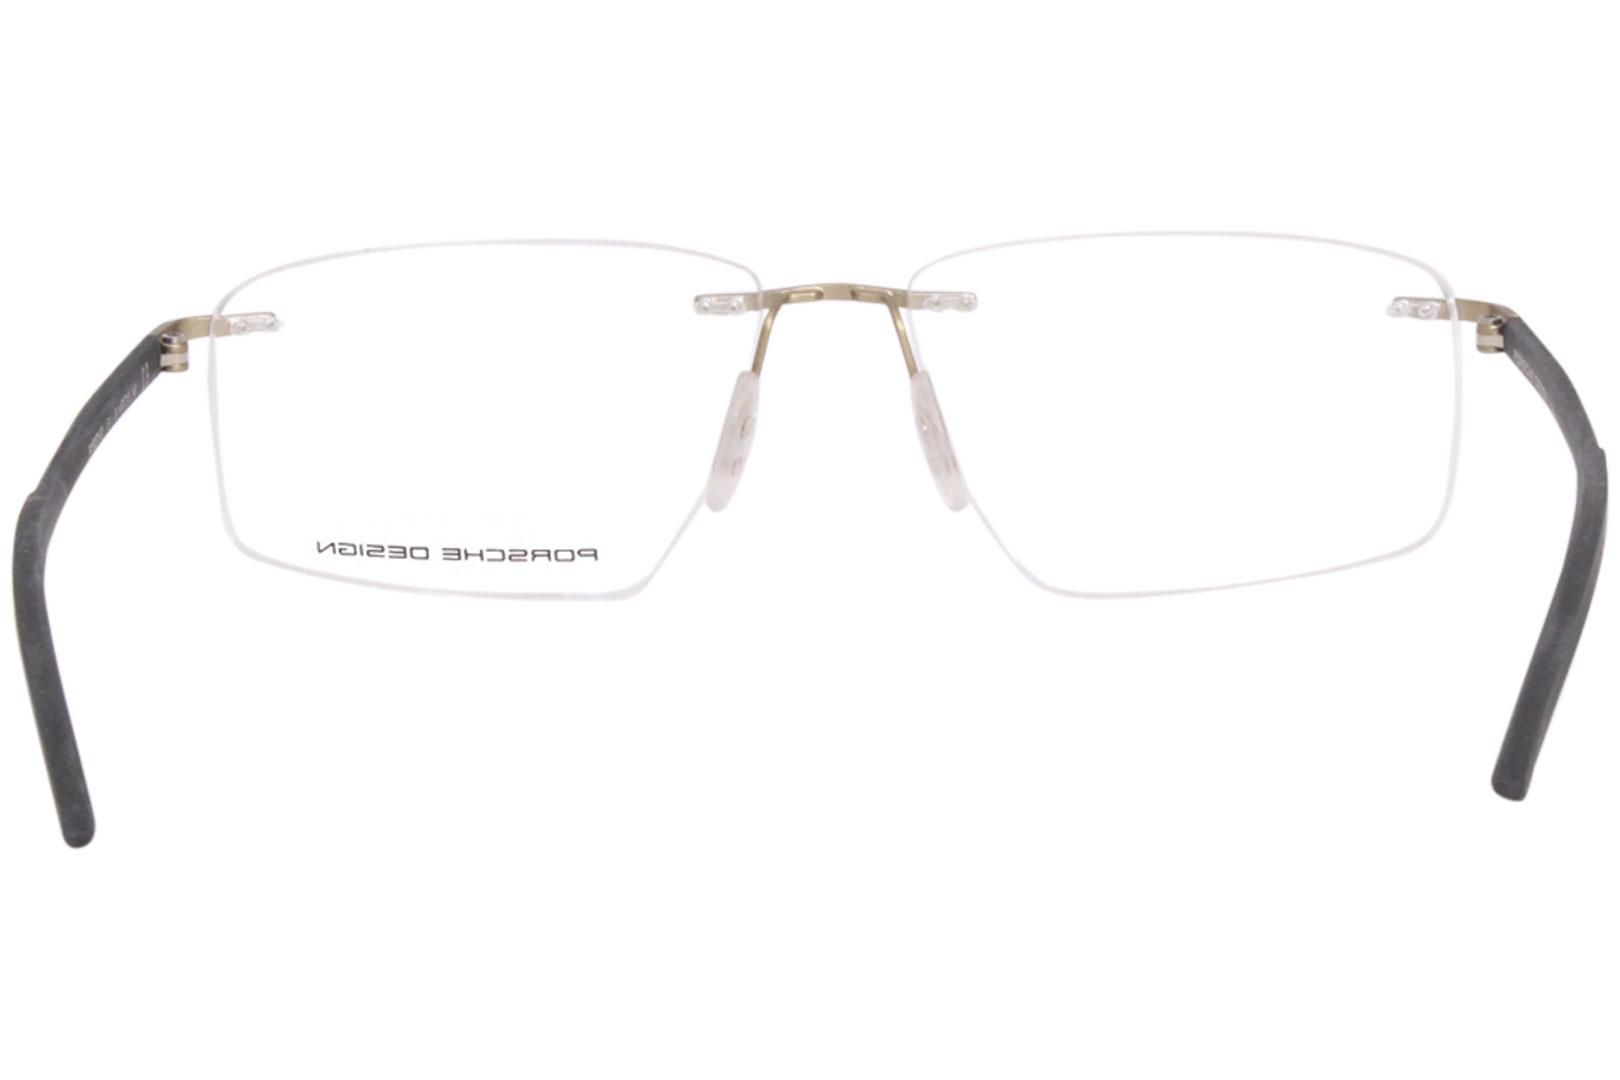 Porsche Design P8341-B Eyeglasses Men's Gold/Grey Rimless 54-15-140 ...